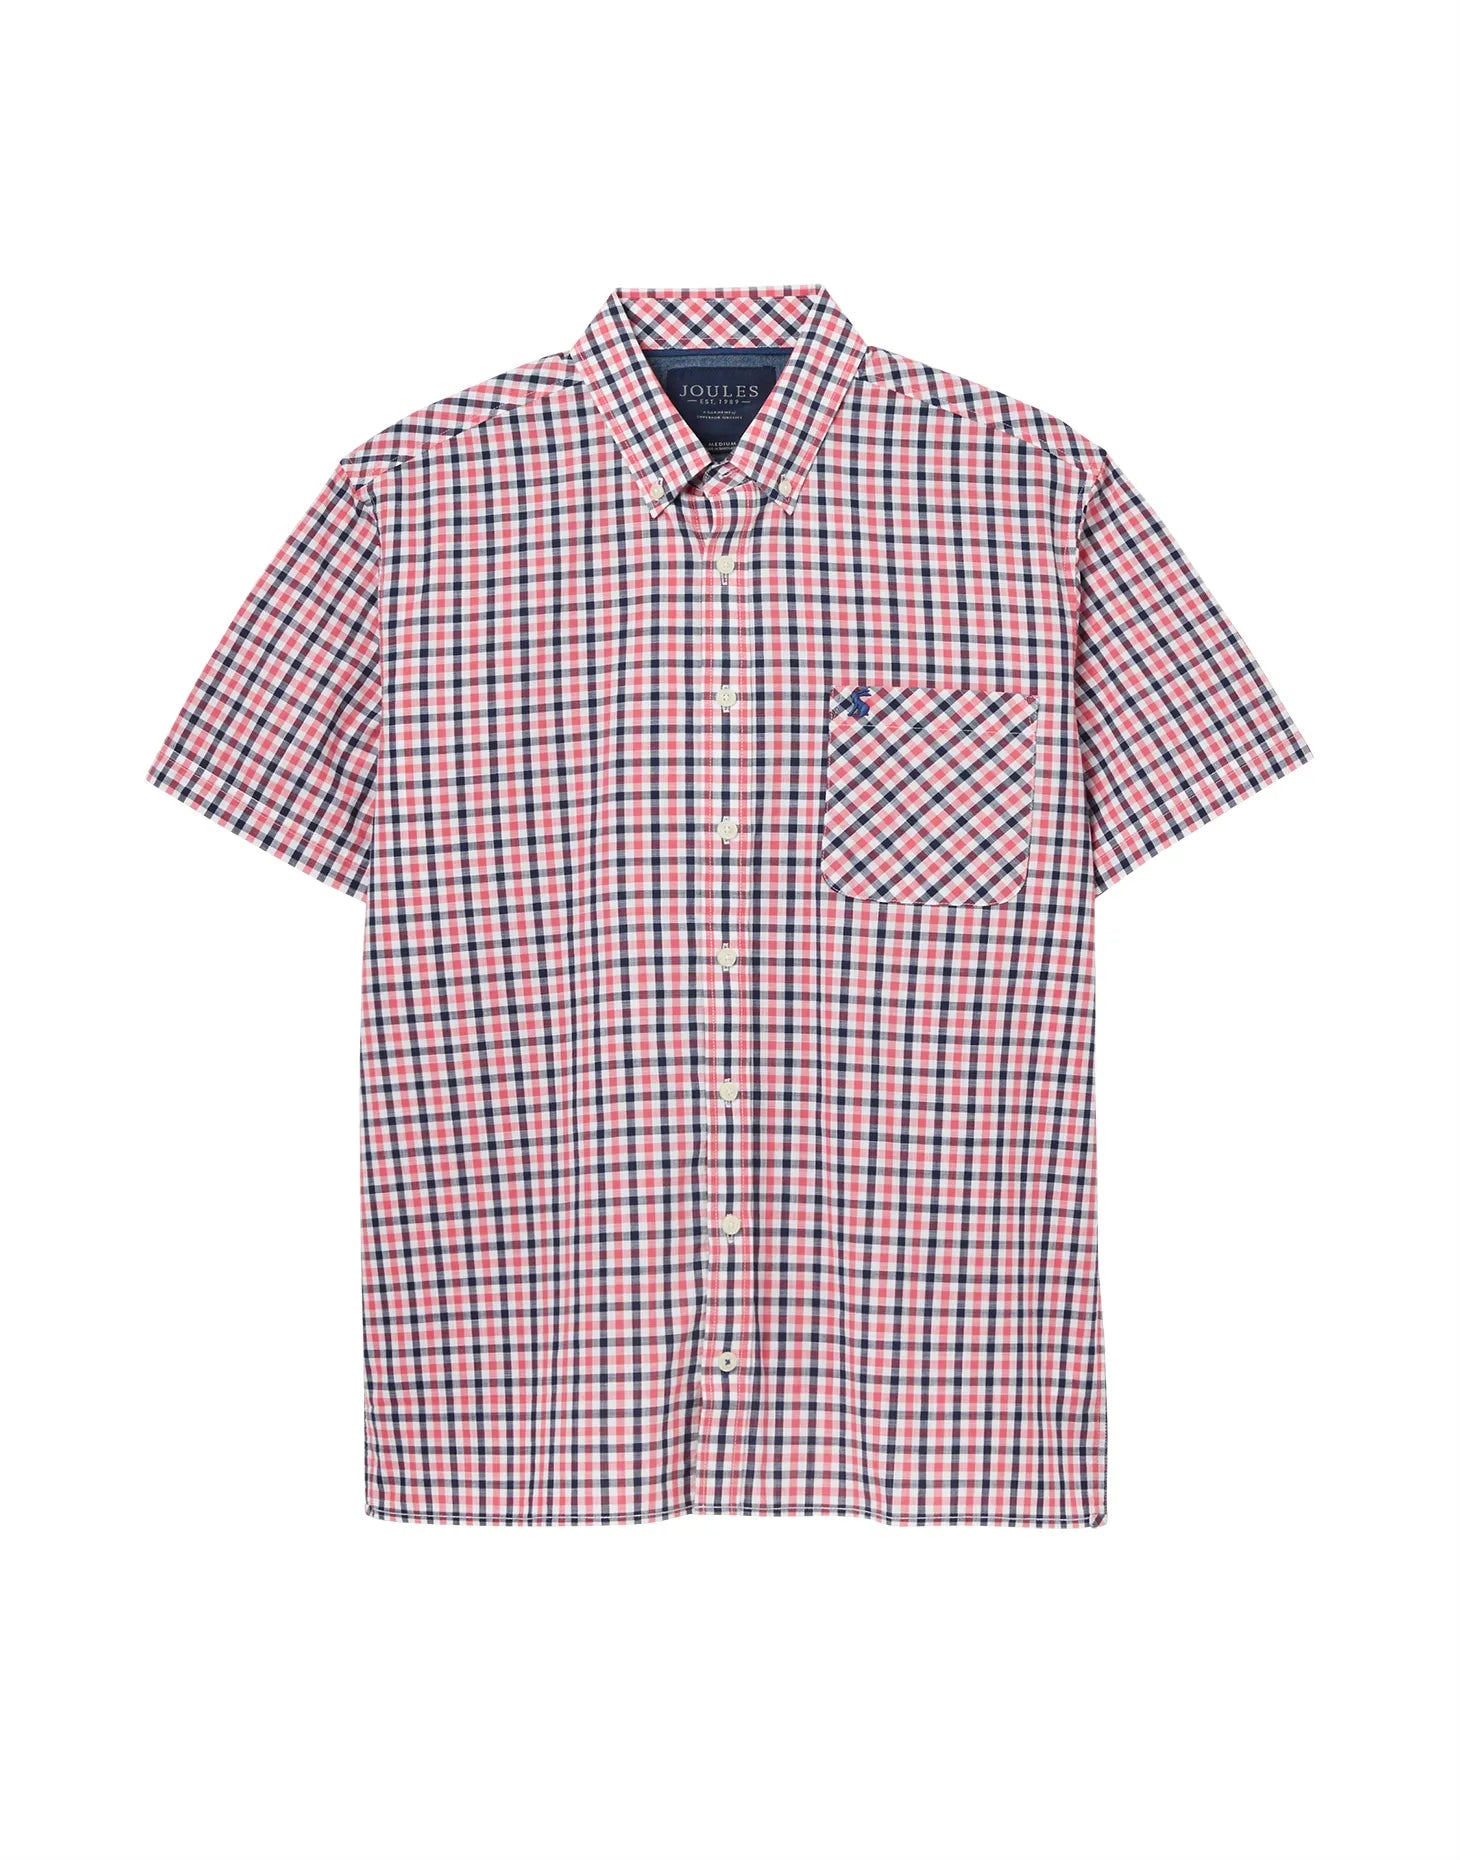 Wilson Shirt - Pink Navy Gingham